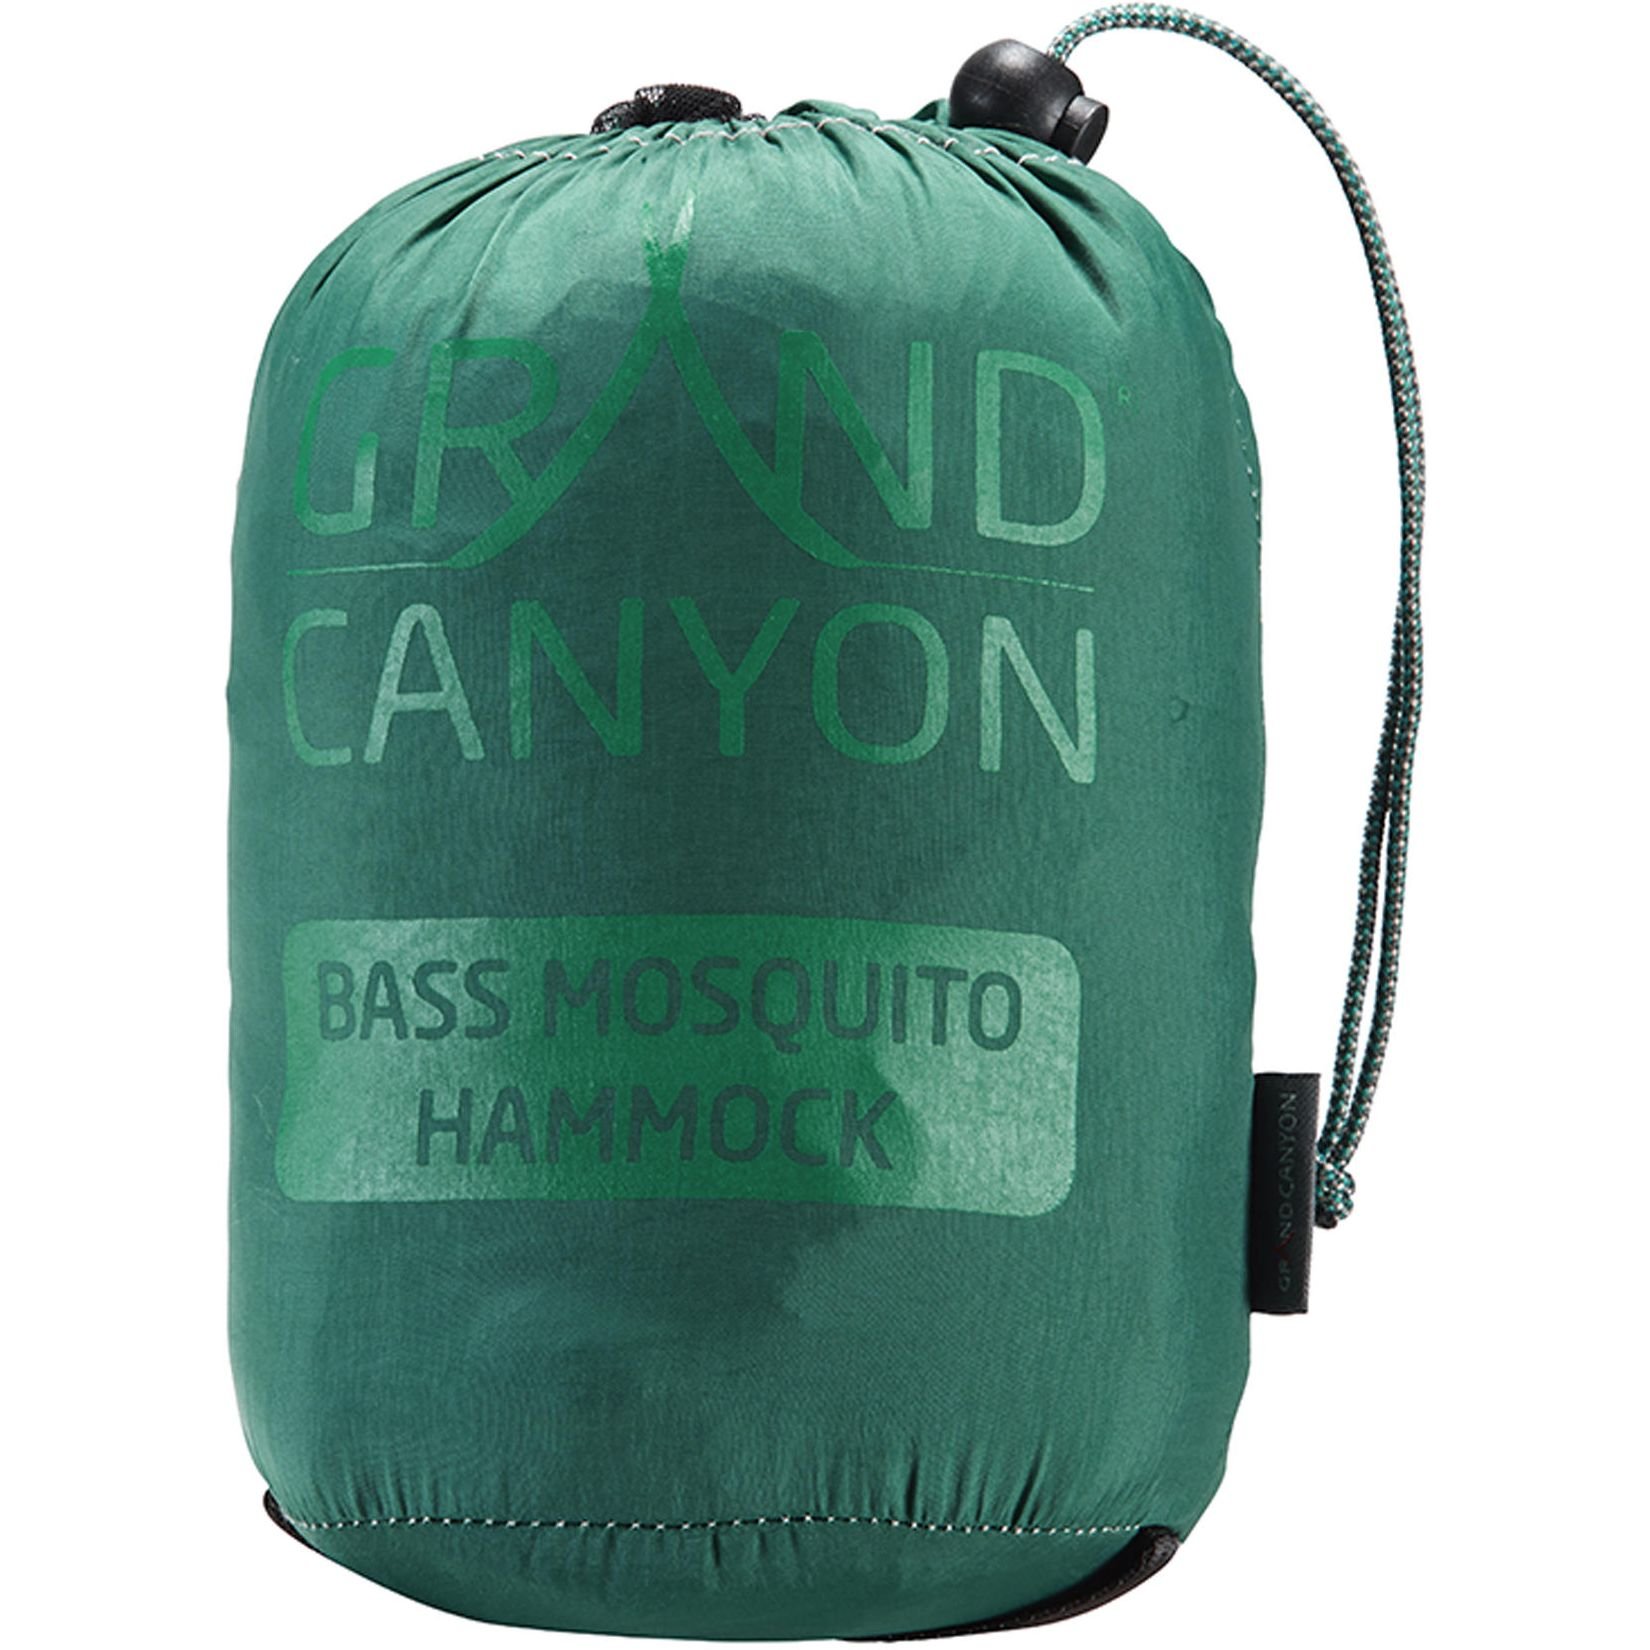 Гамак Grand Canyon Bass Mosquito Hammock Storm зеленый (360028) - фото 4